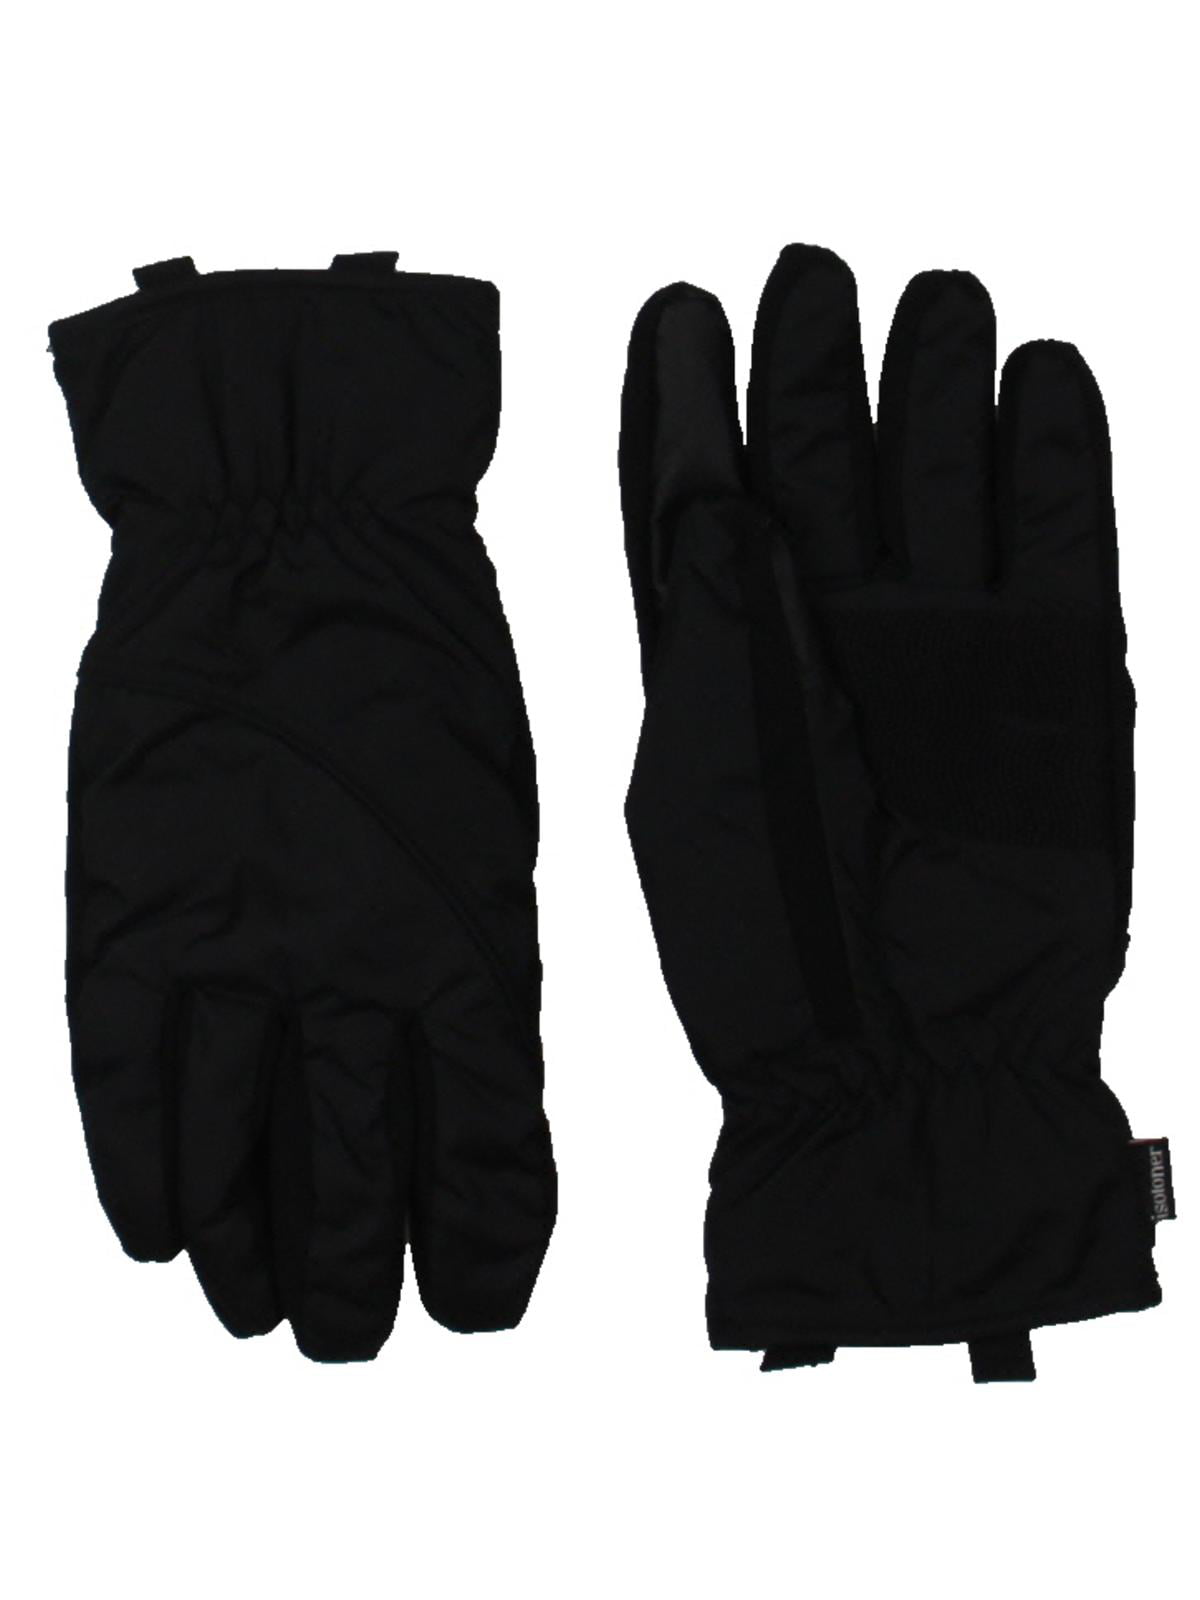 HEAD JR ThermalFUR Fleece Gloves Child Size 